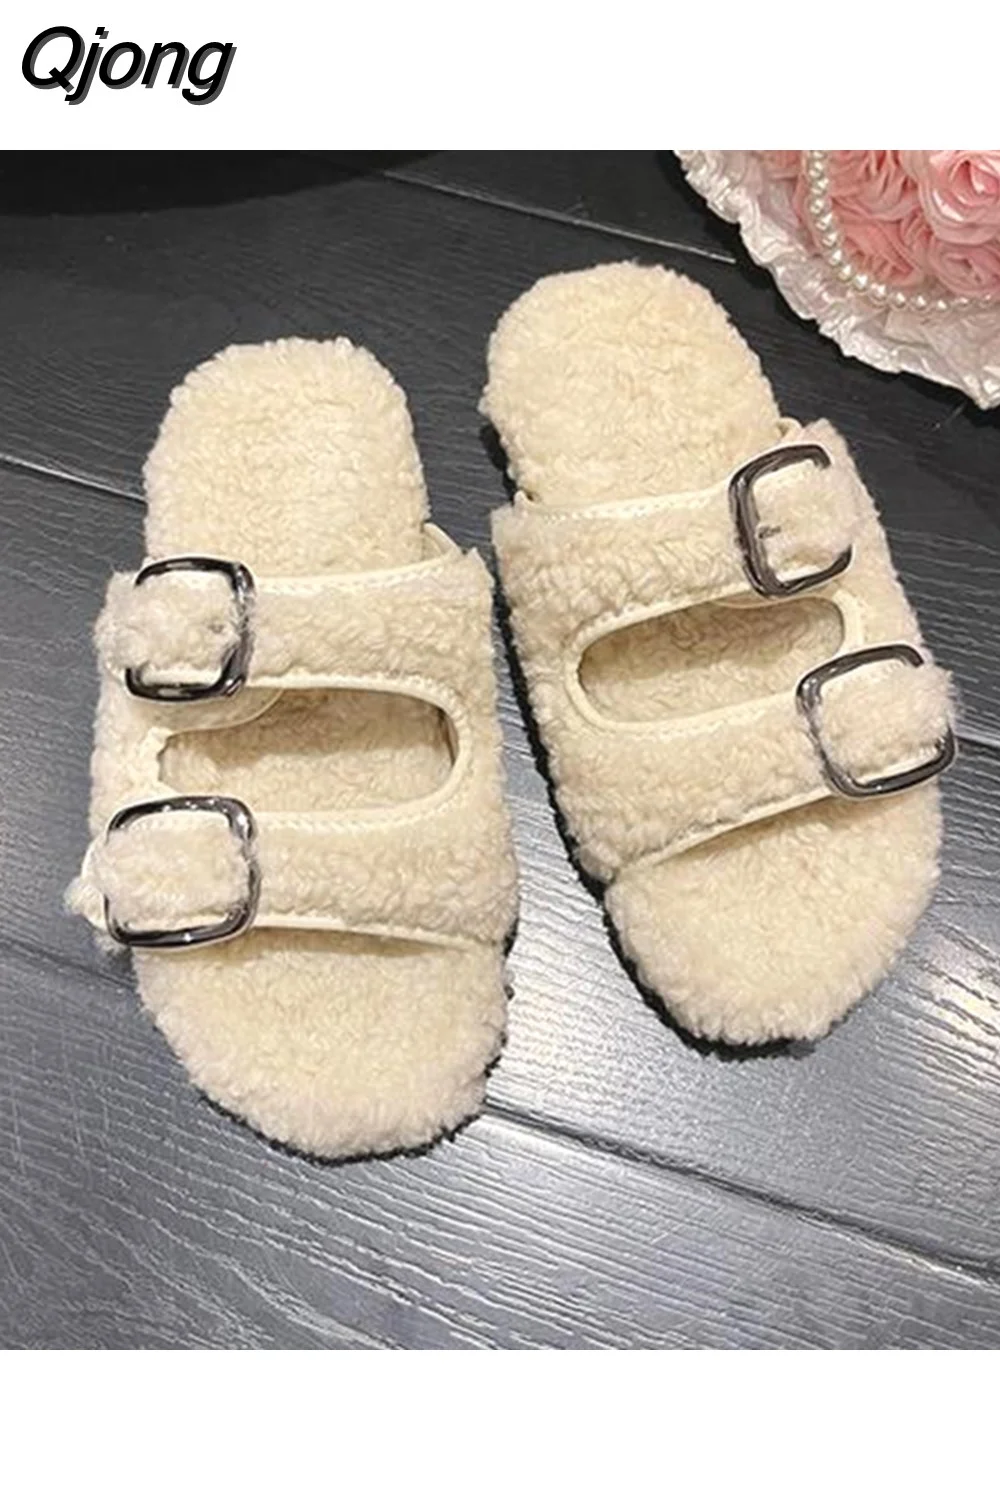 Qjong Shoes Luxury Sandals Summer Heels Espadrilles Platform Buckle Strap Suede Fashion Girls Outside Low High Fur Clogs Slippe